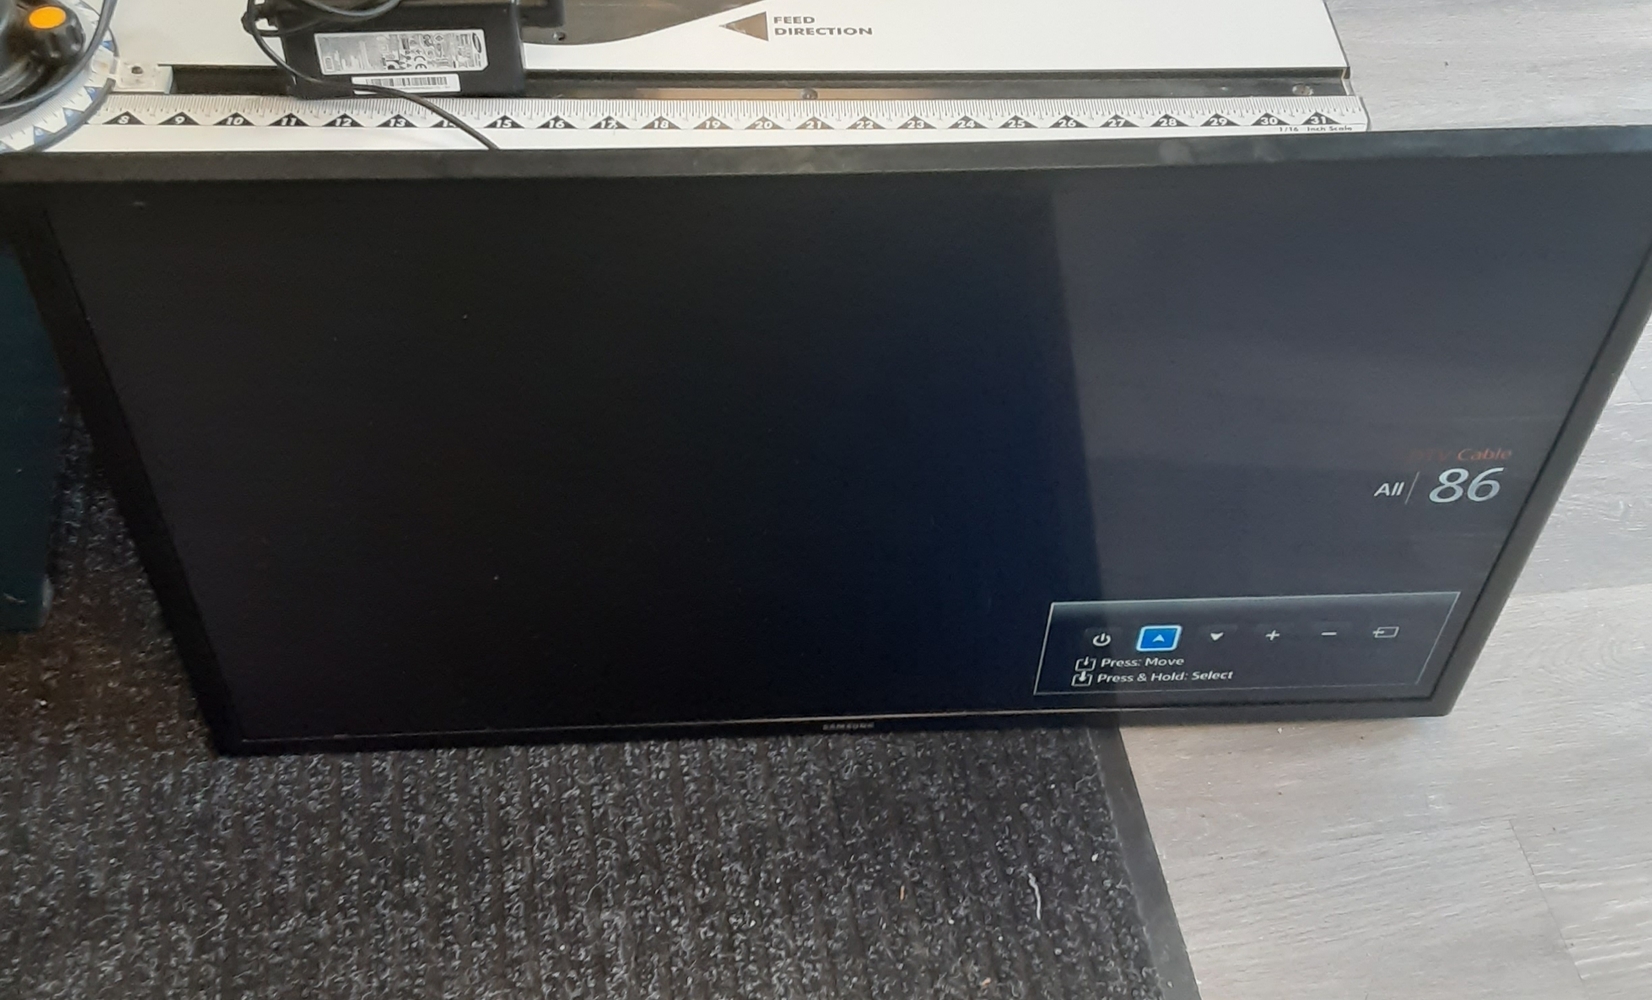 Samsung 32 inch Smart TV un32j5205af- PRE-OWNED NO STAND OR REMOTE 